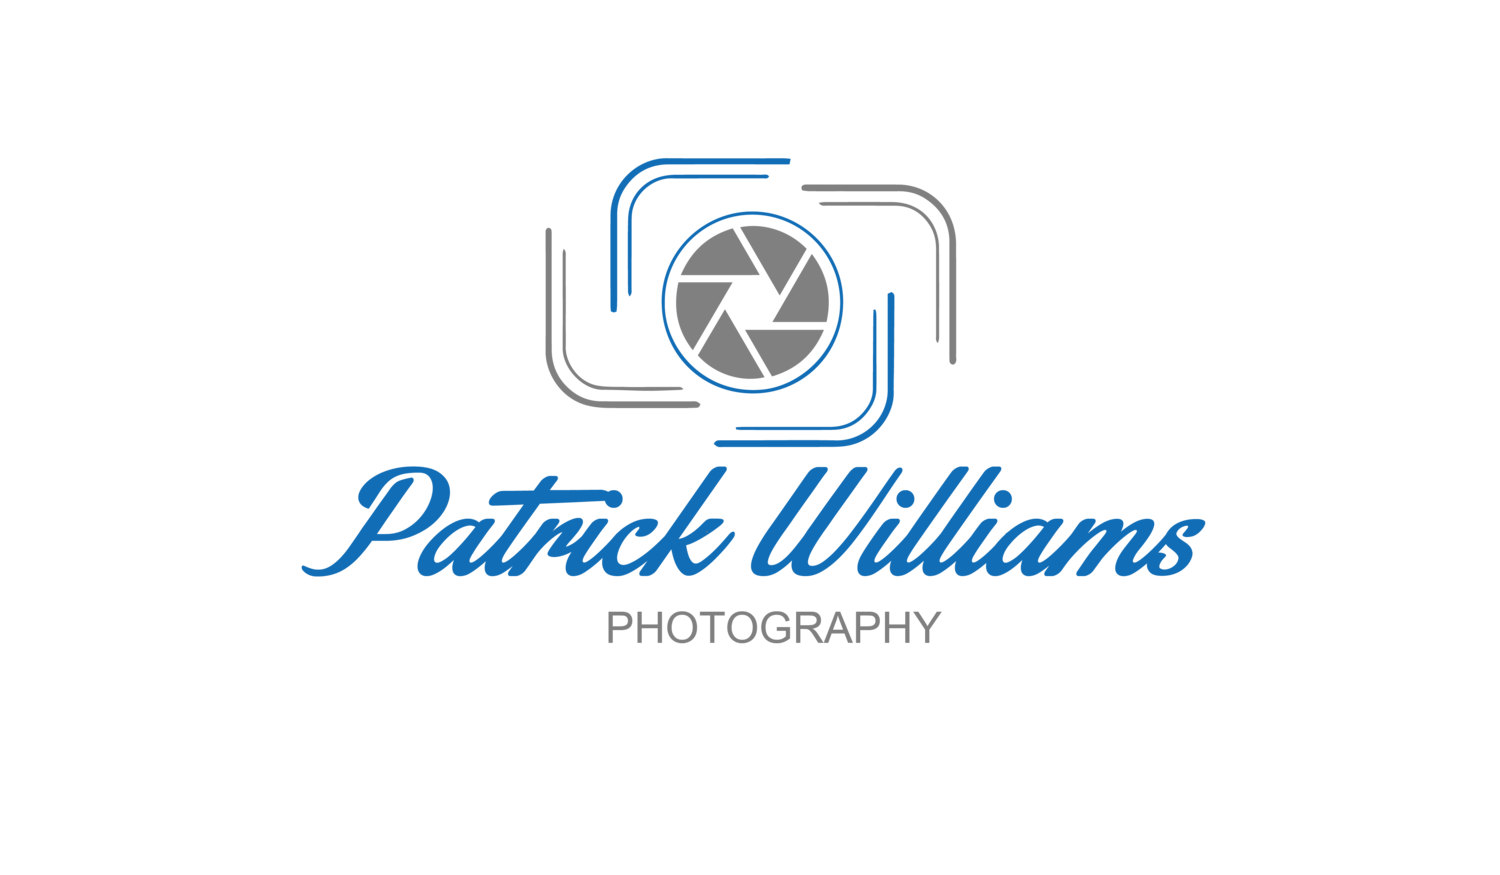 Patrick Williams Photography